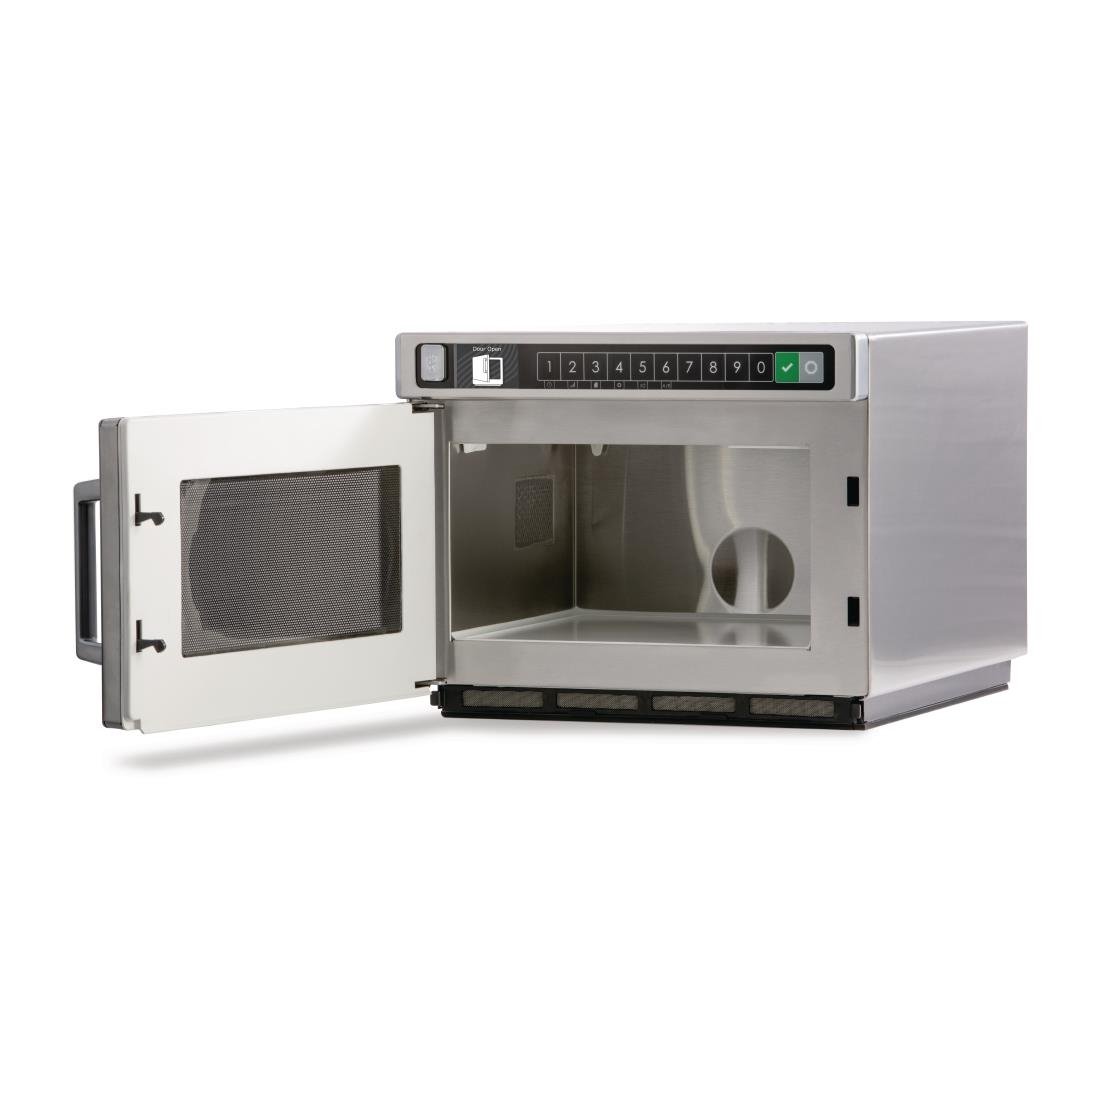 Menumaster Heavy Duty Compact Microwave DEC18E2 JD Catering Equipment Solutions Ltd